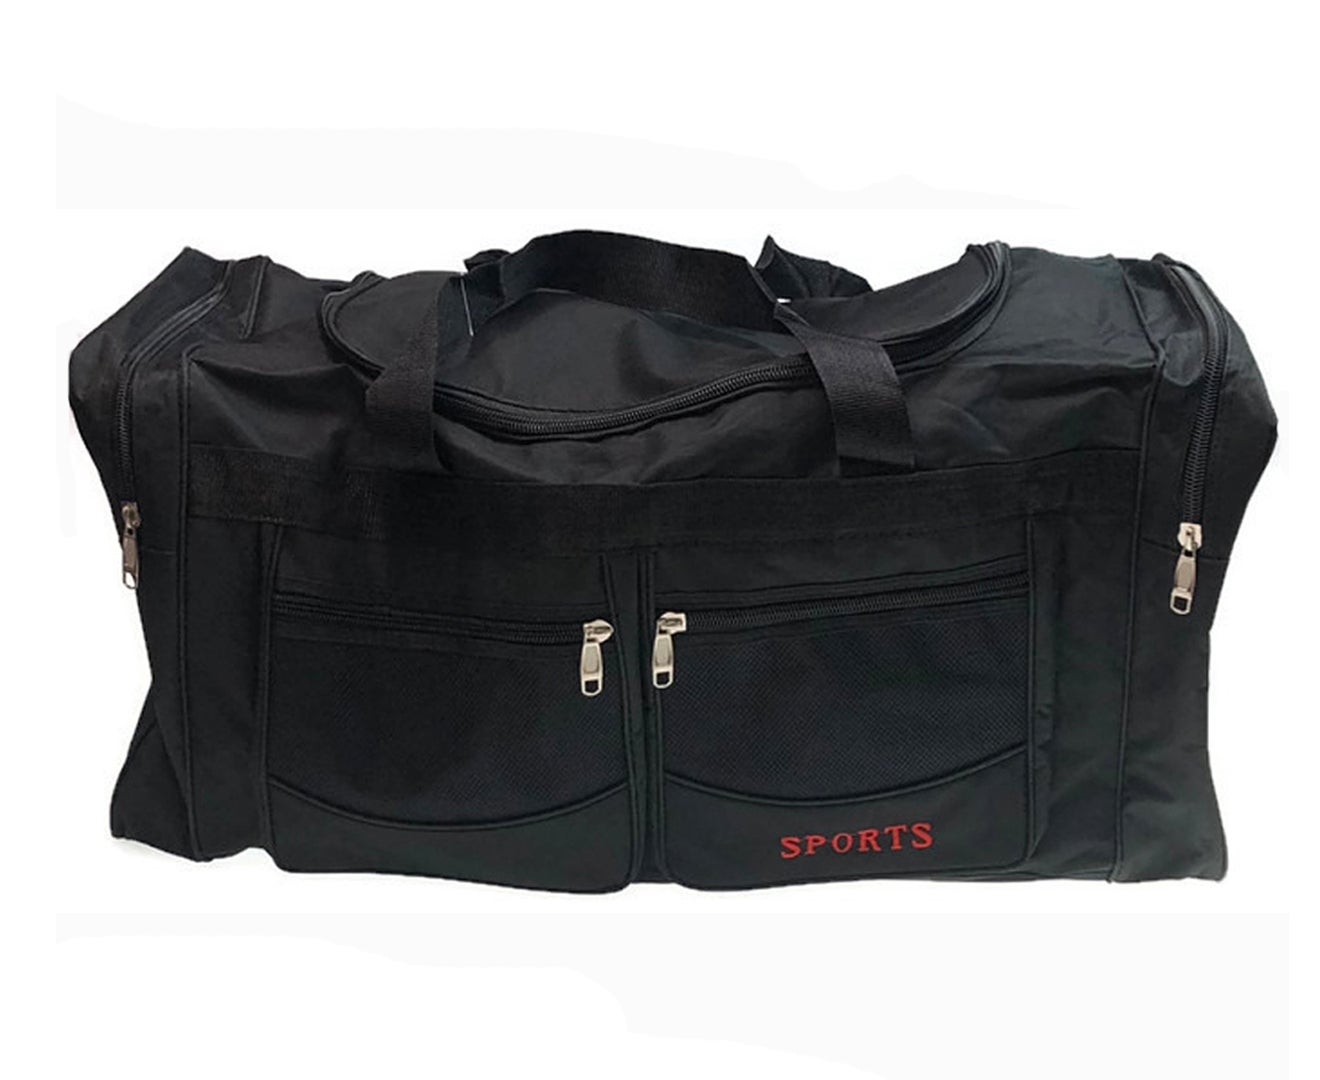 EXTRA LARGE Sports Duffle Bag Gym Canvas Duffel Travel Foldable - Black | Buy Duffle Bags - 690039